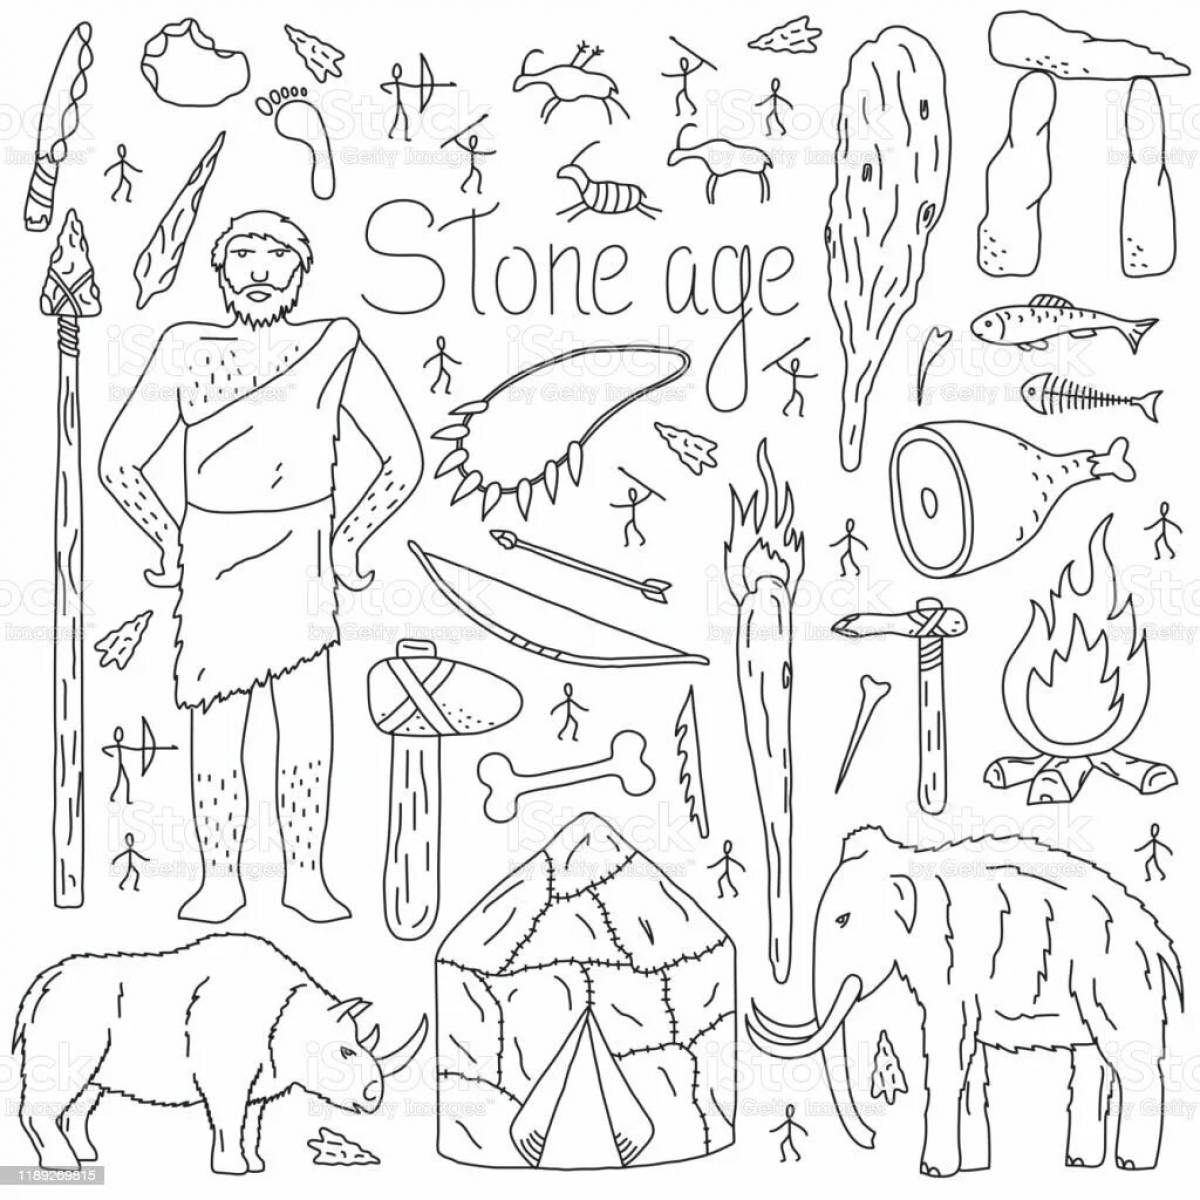 Stone age #4